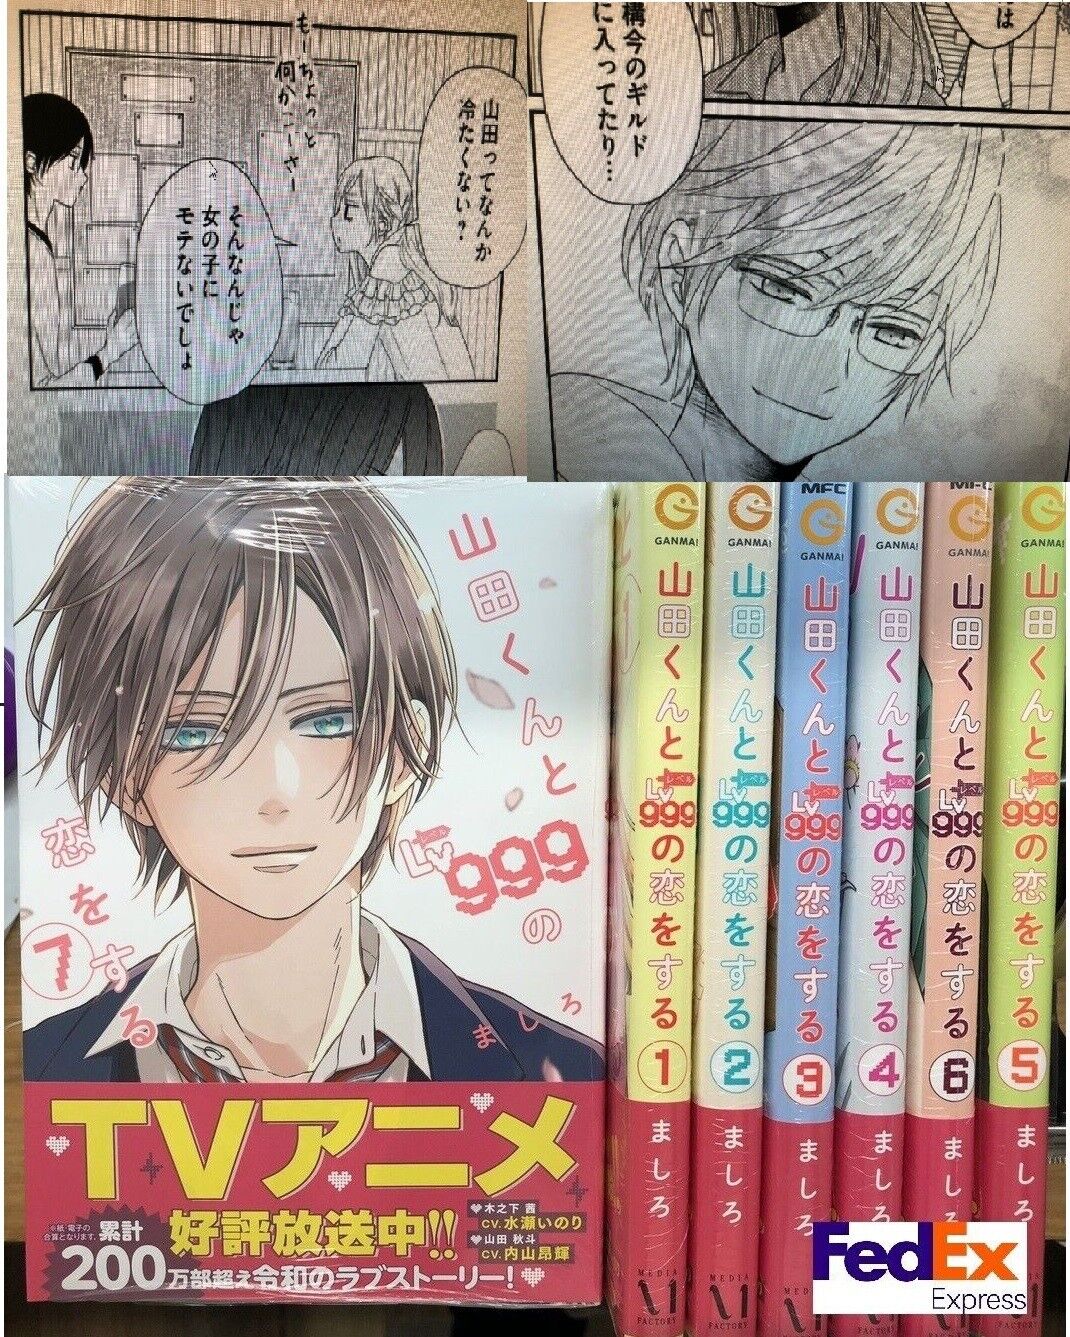 my lv999 love for yamada-kun manga